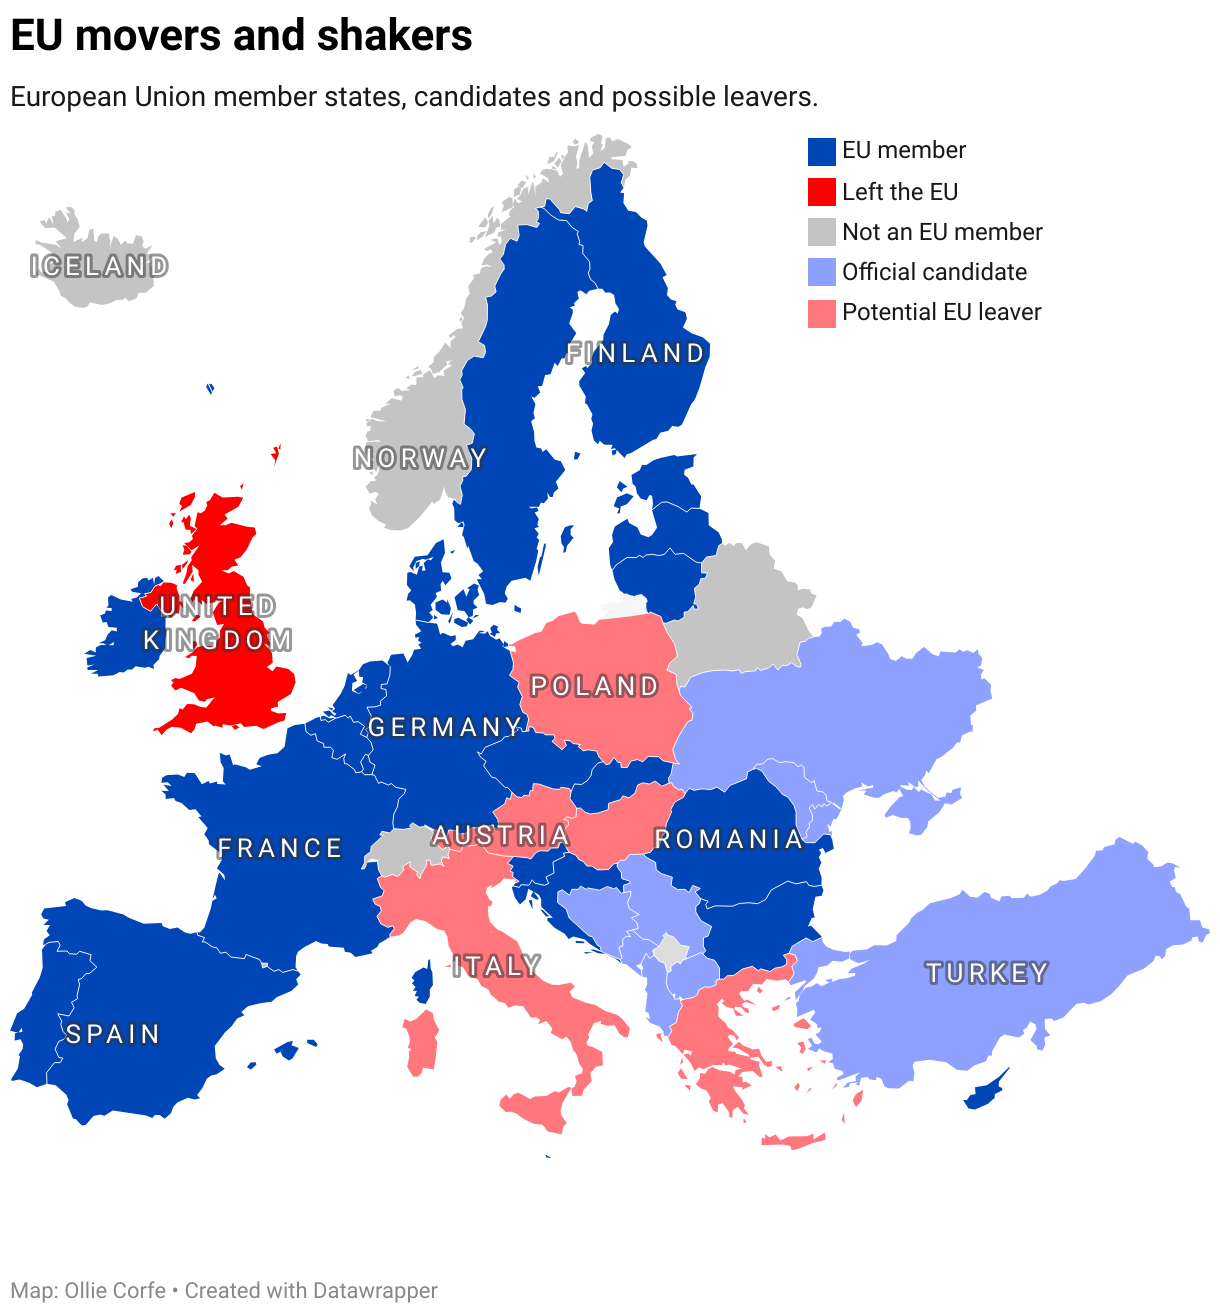 Map of the EU based on EU stance.